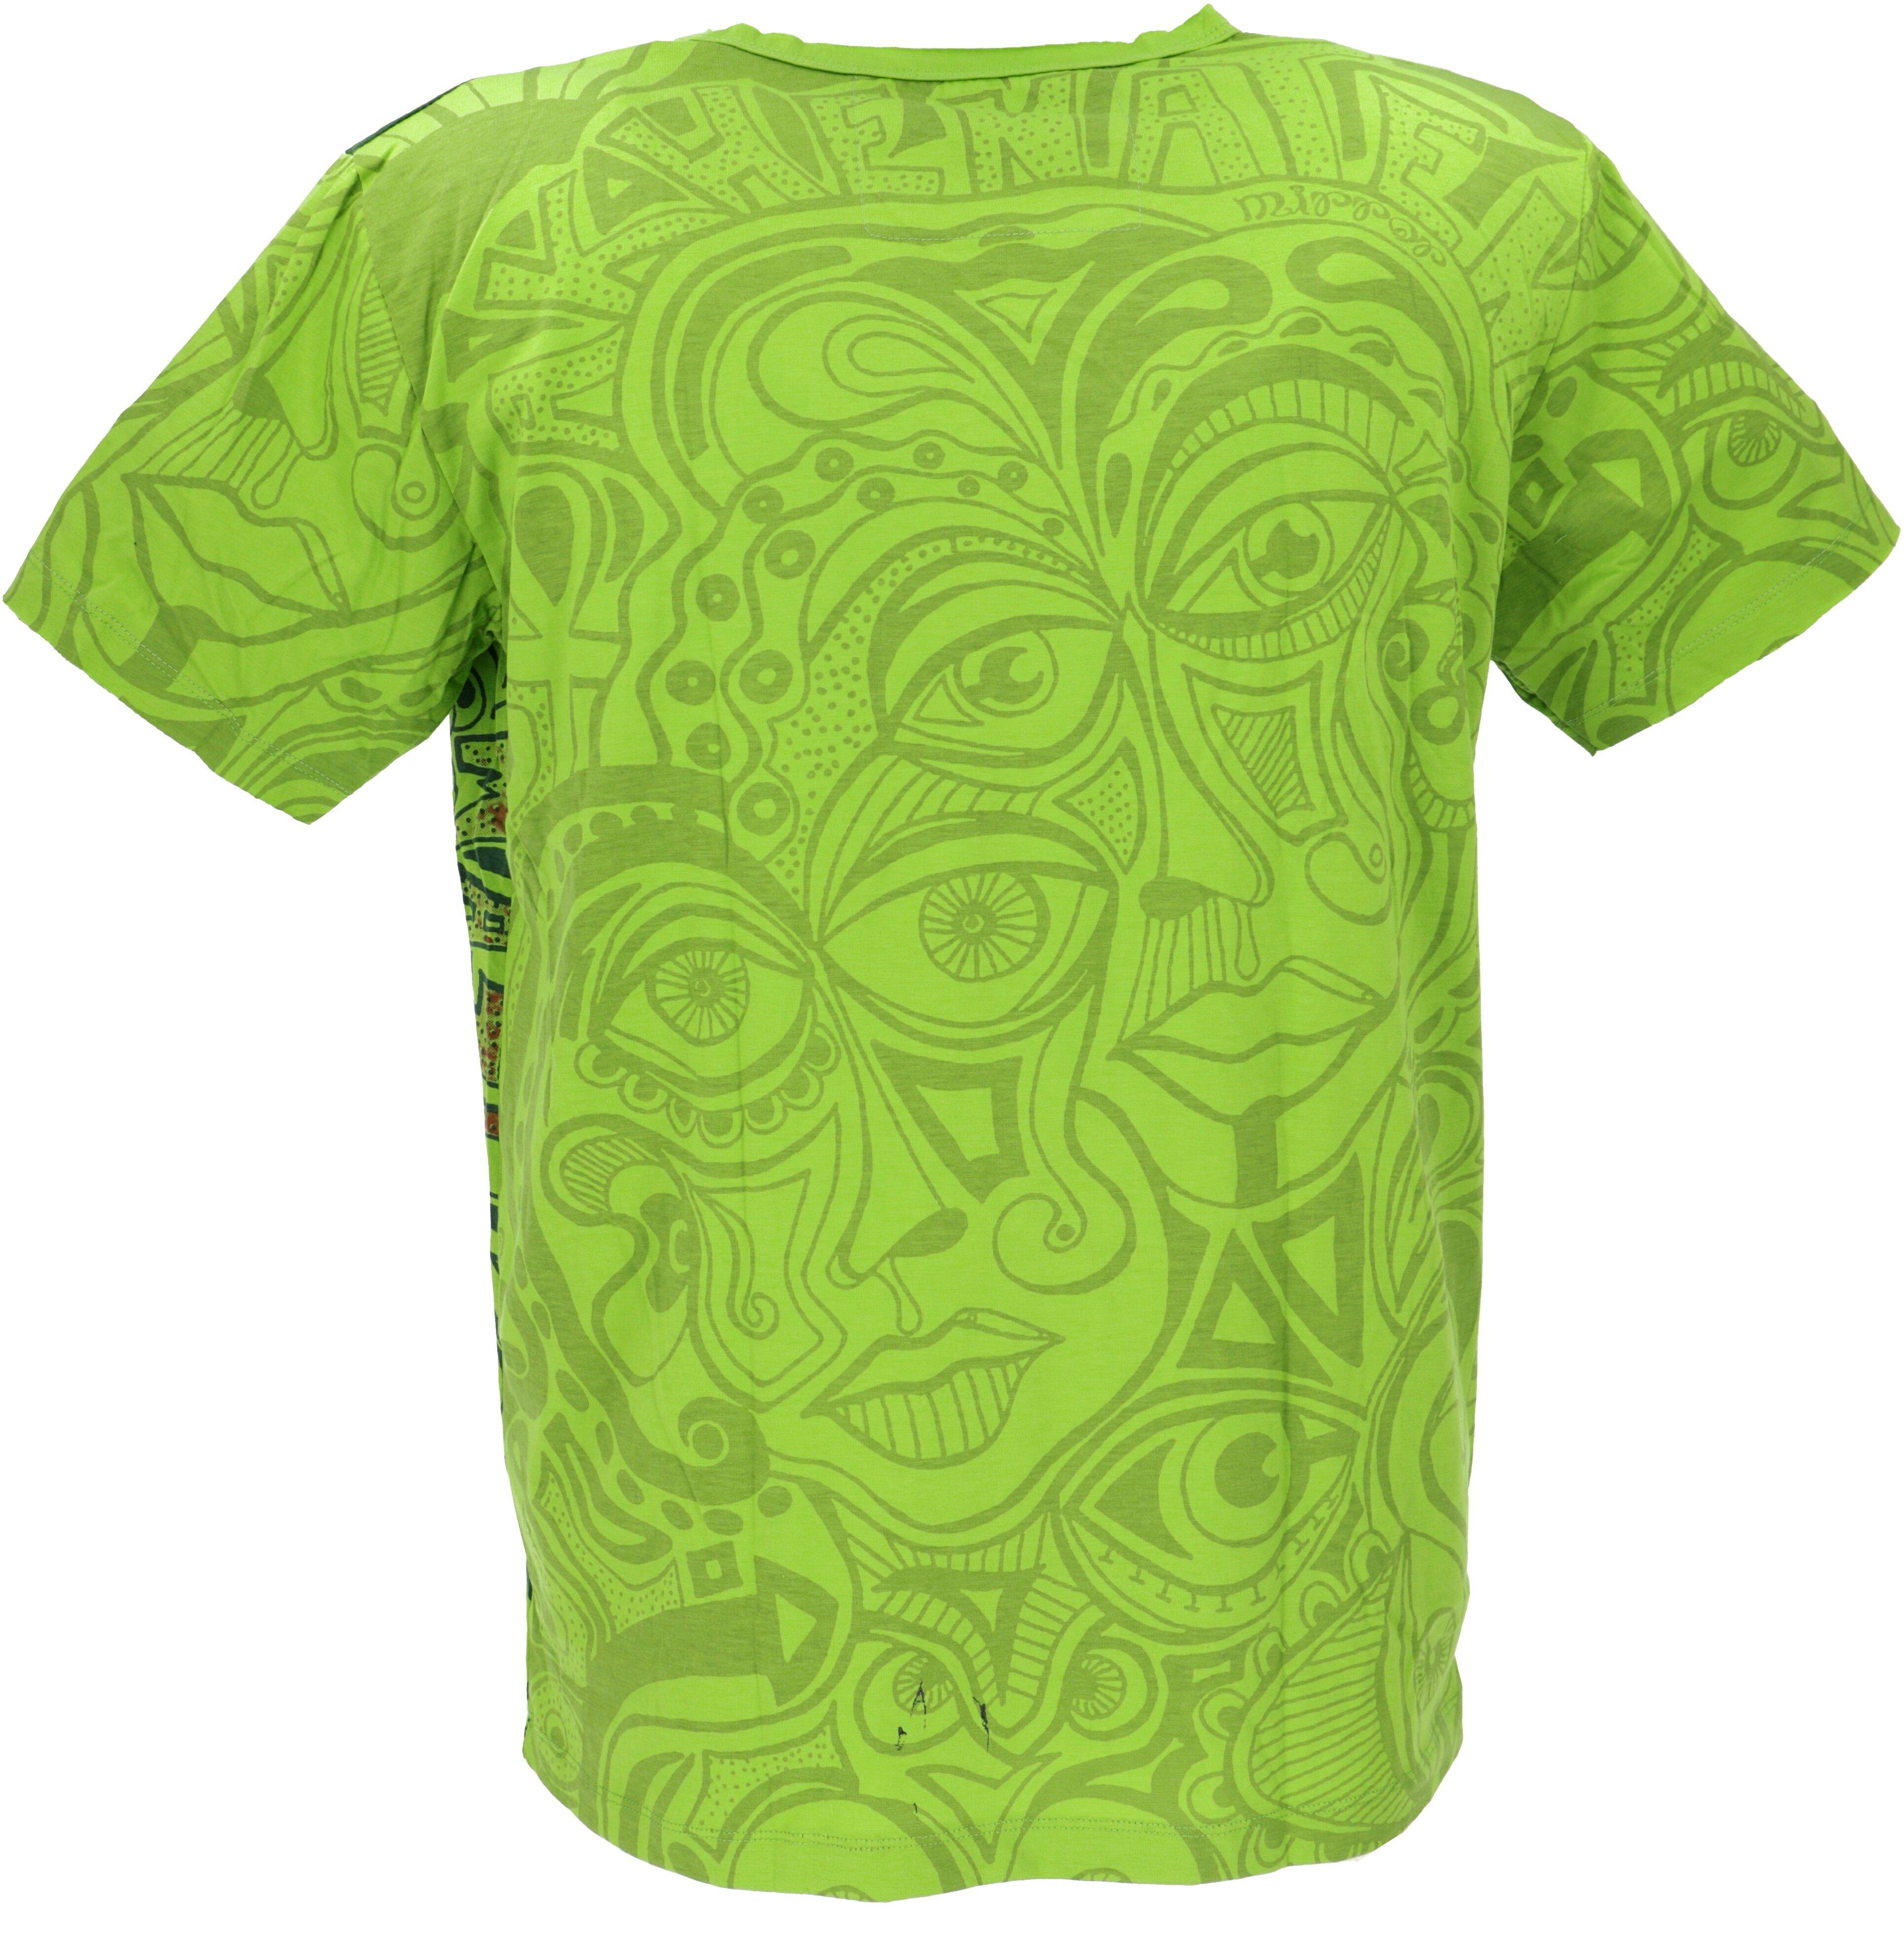 Guru-Shop T-Shirt Bekleidung Mirror T-Shirt - Style, Goa Faces/grün Festival, alternative